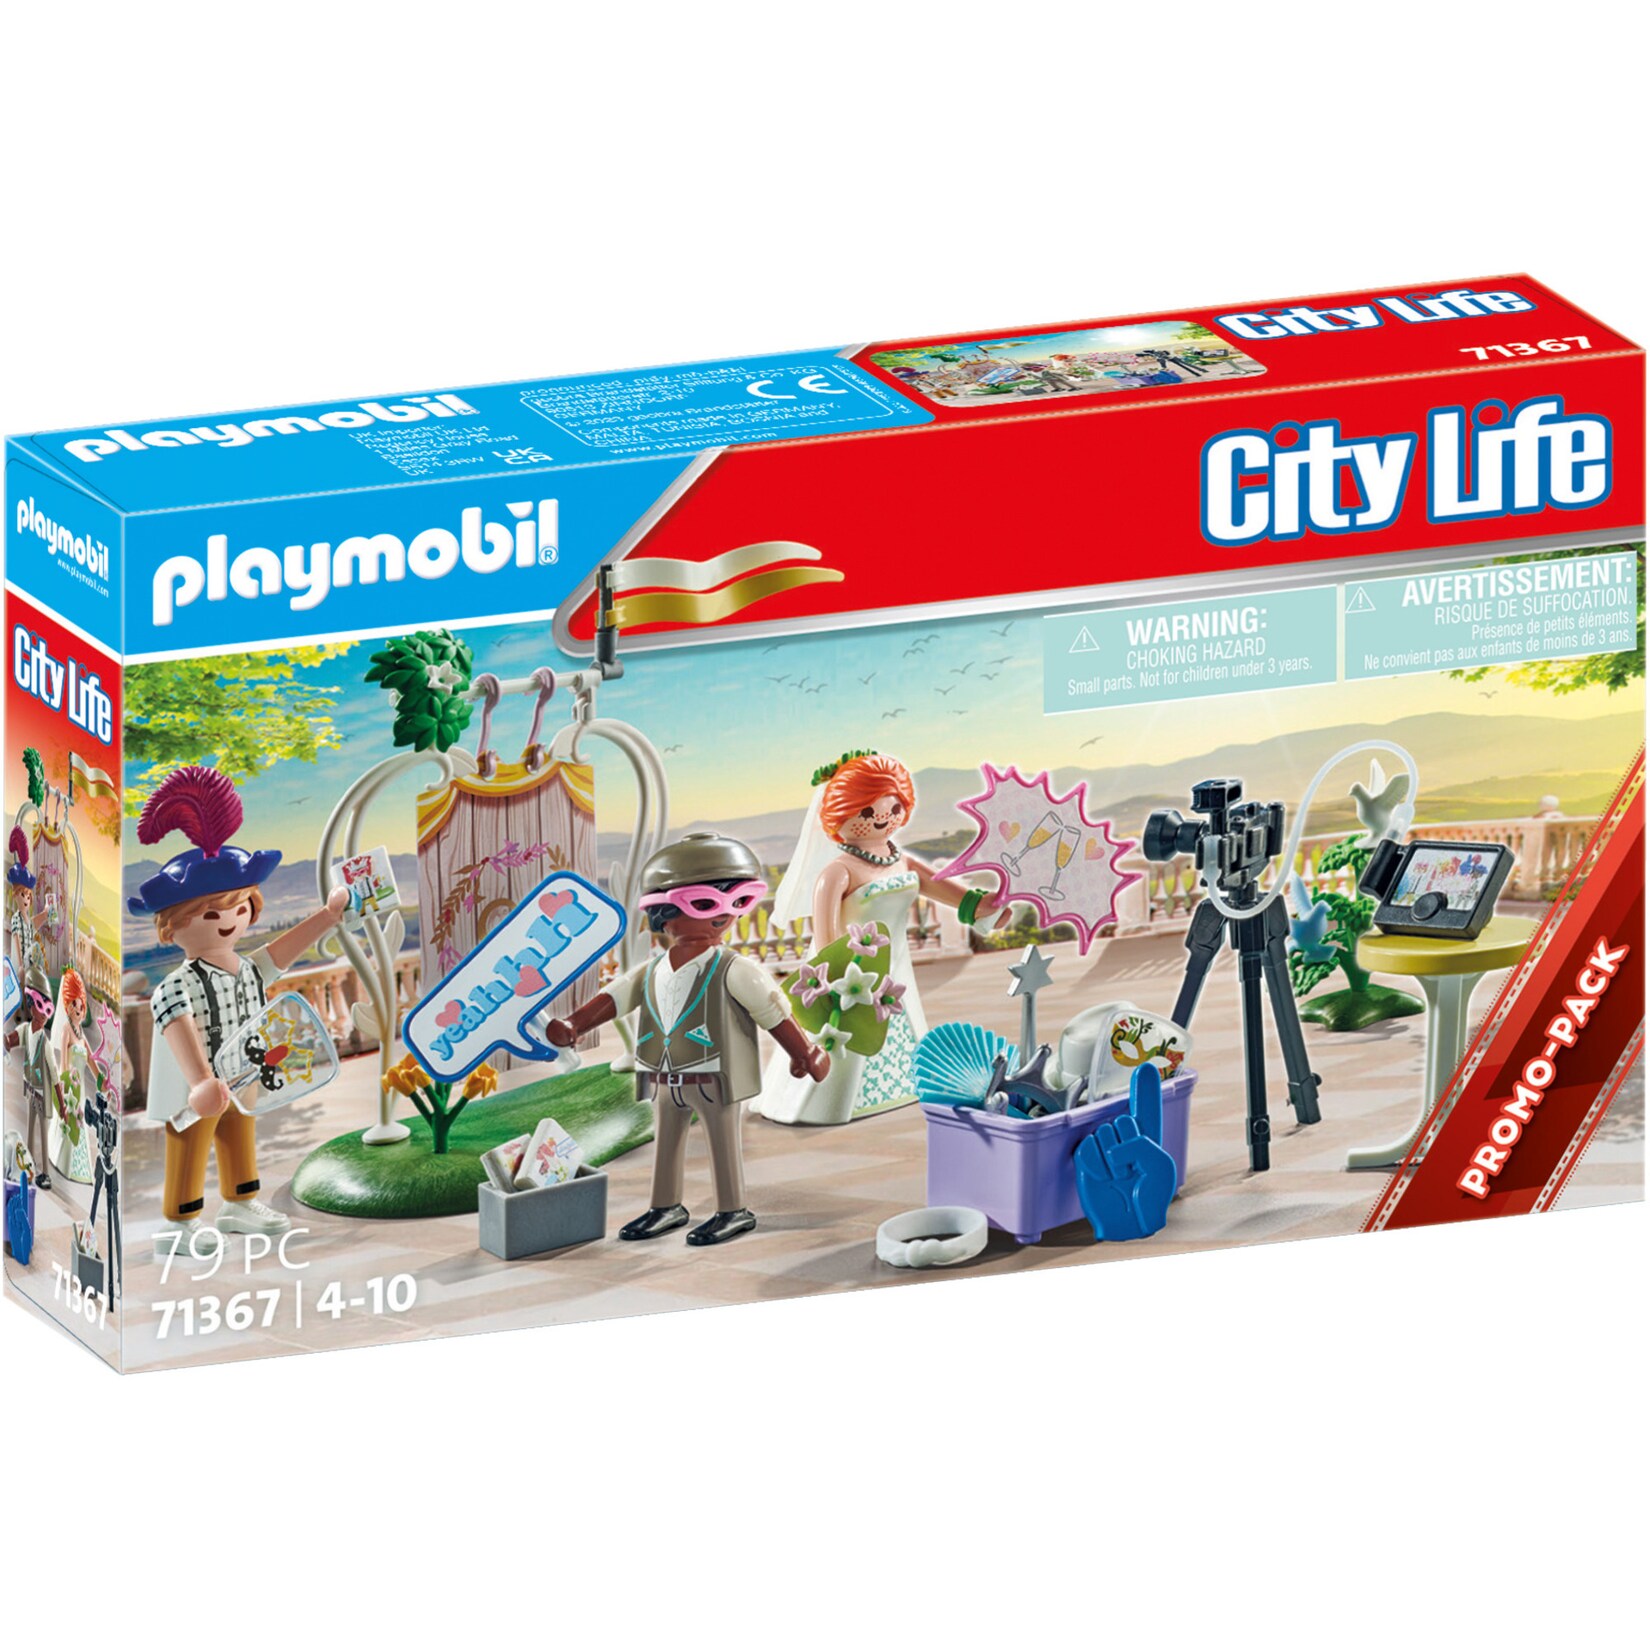 PLAYMOBIL Konstruktionsspielzeug City Life Hochzeits Fotobox